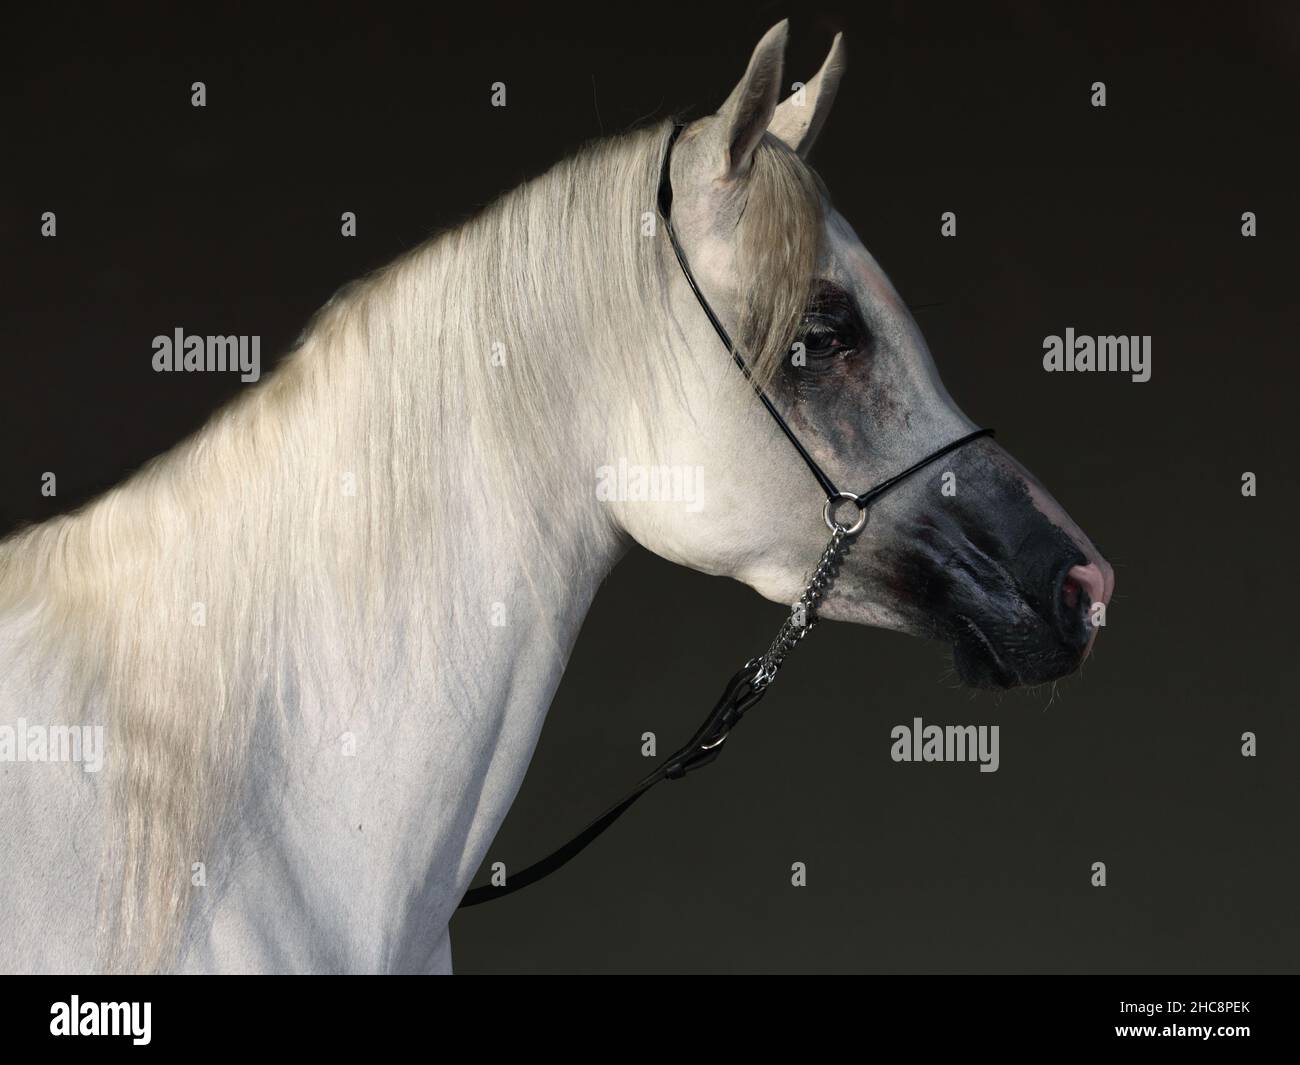 Arabian horse portrait against dark stable background Stock Photo